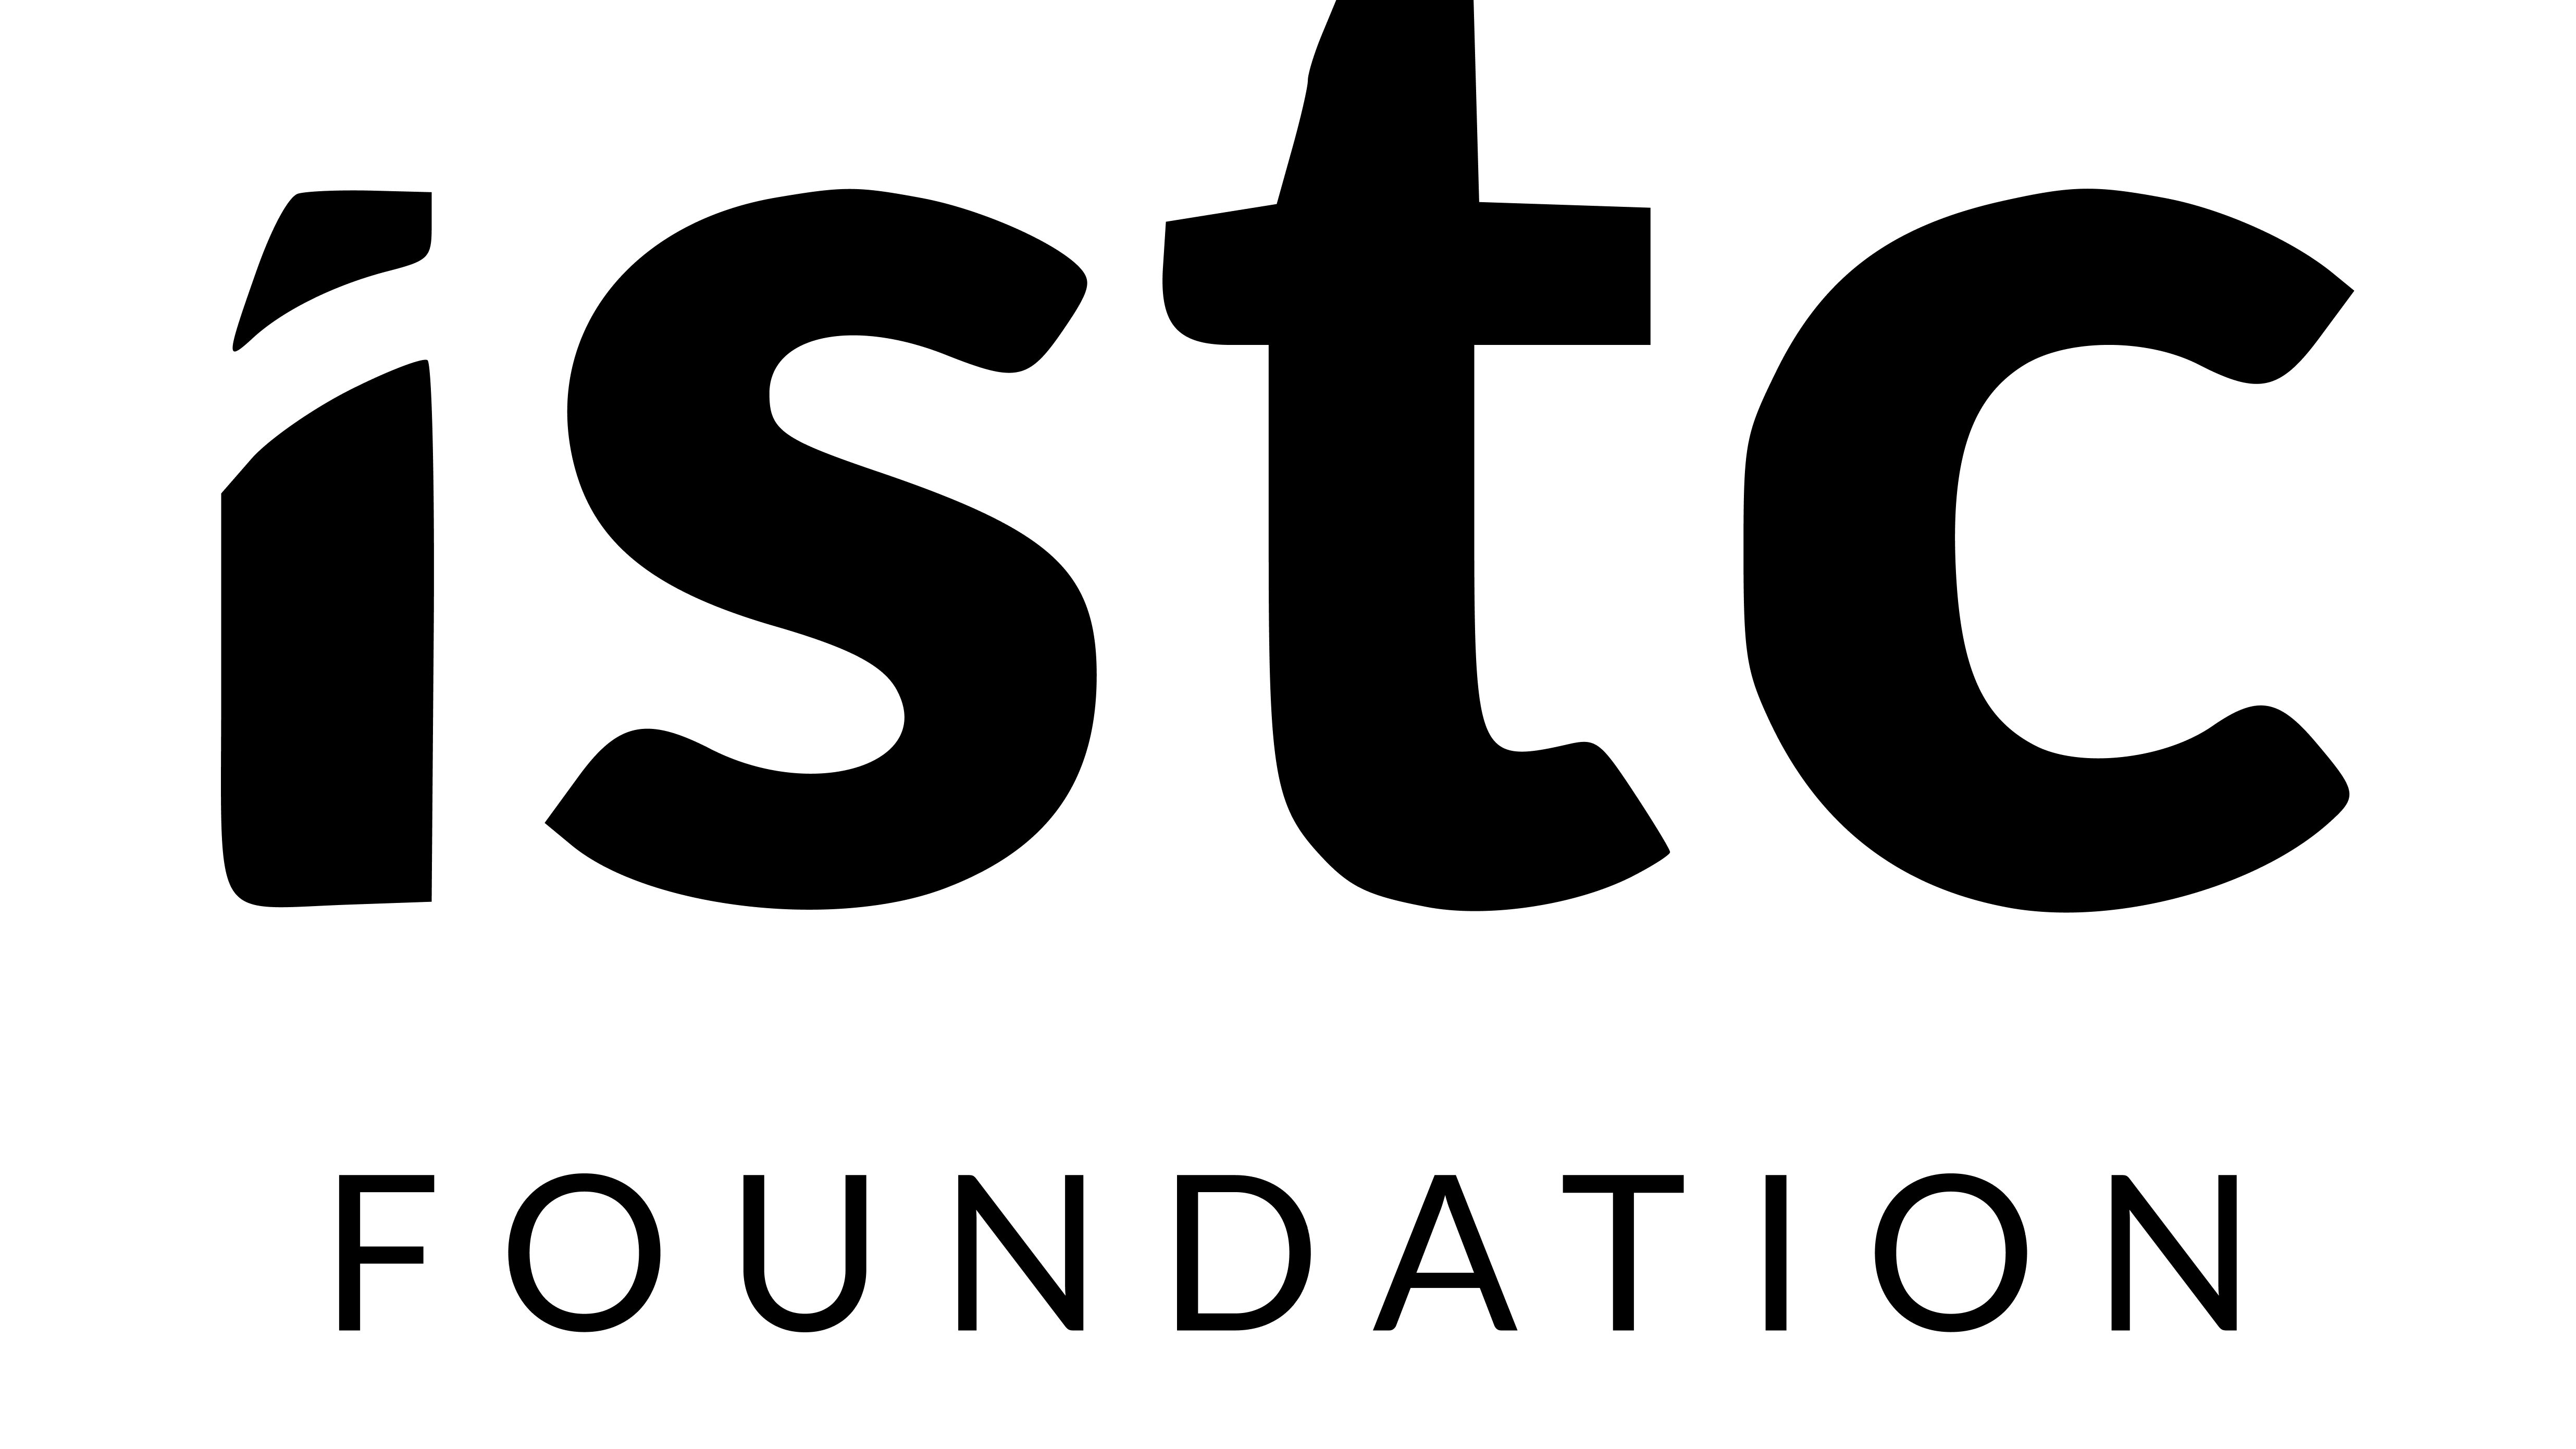 4328-istc-black-logo16x9.png